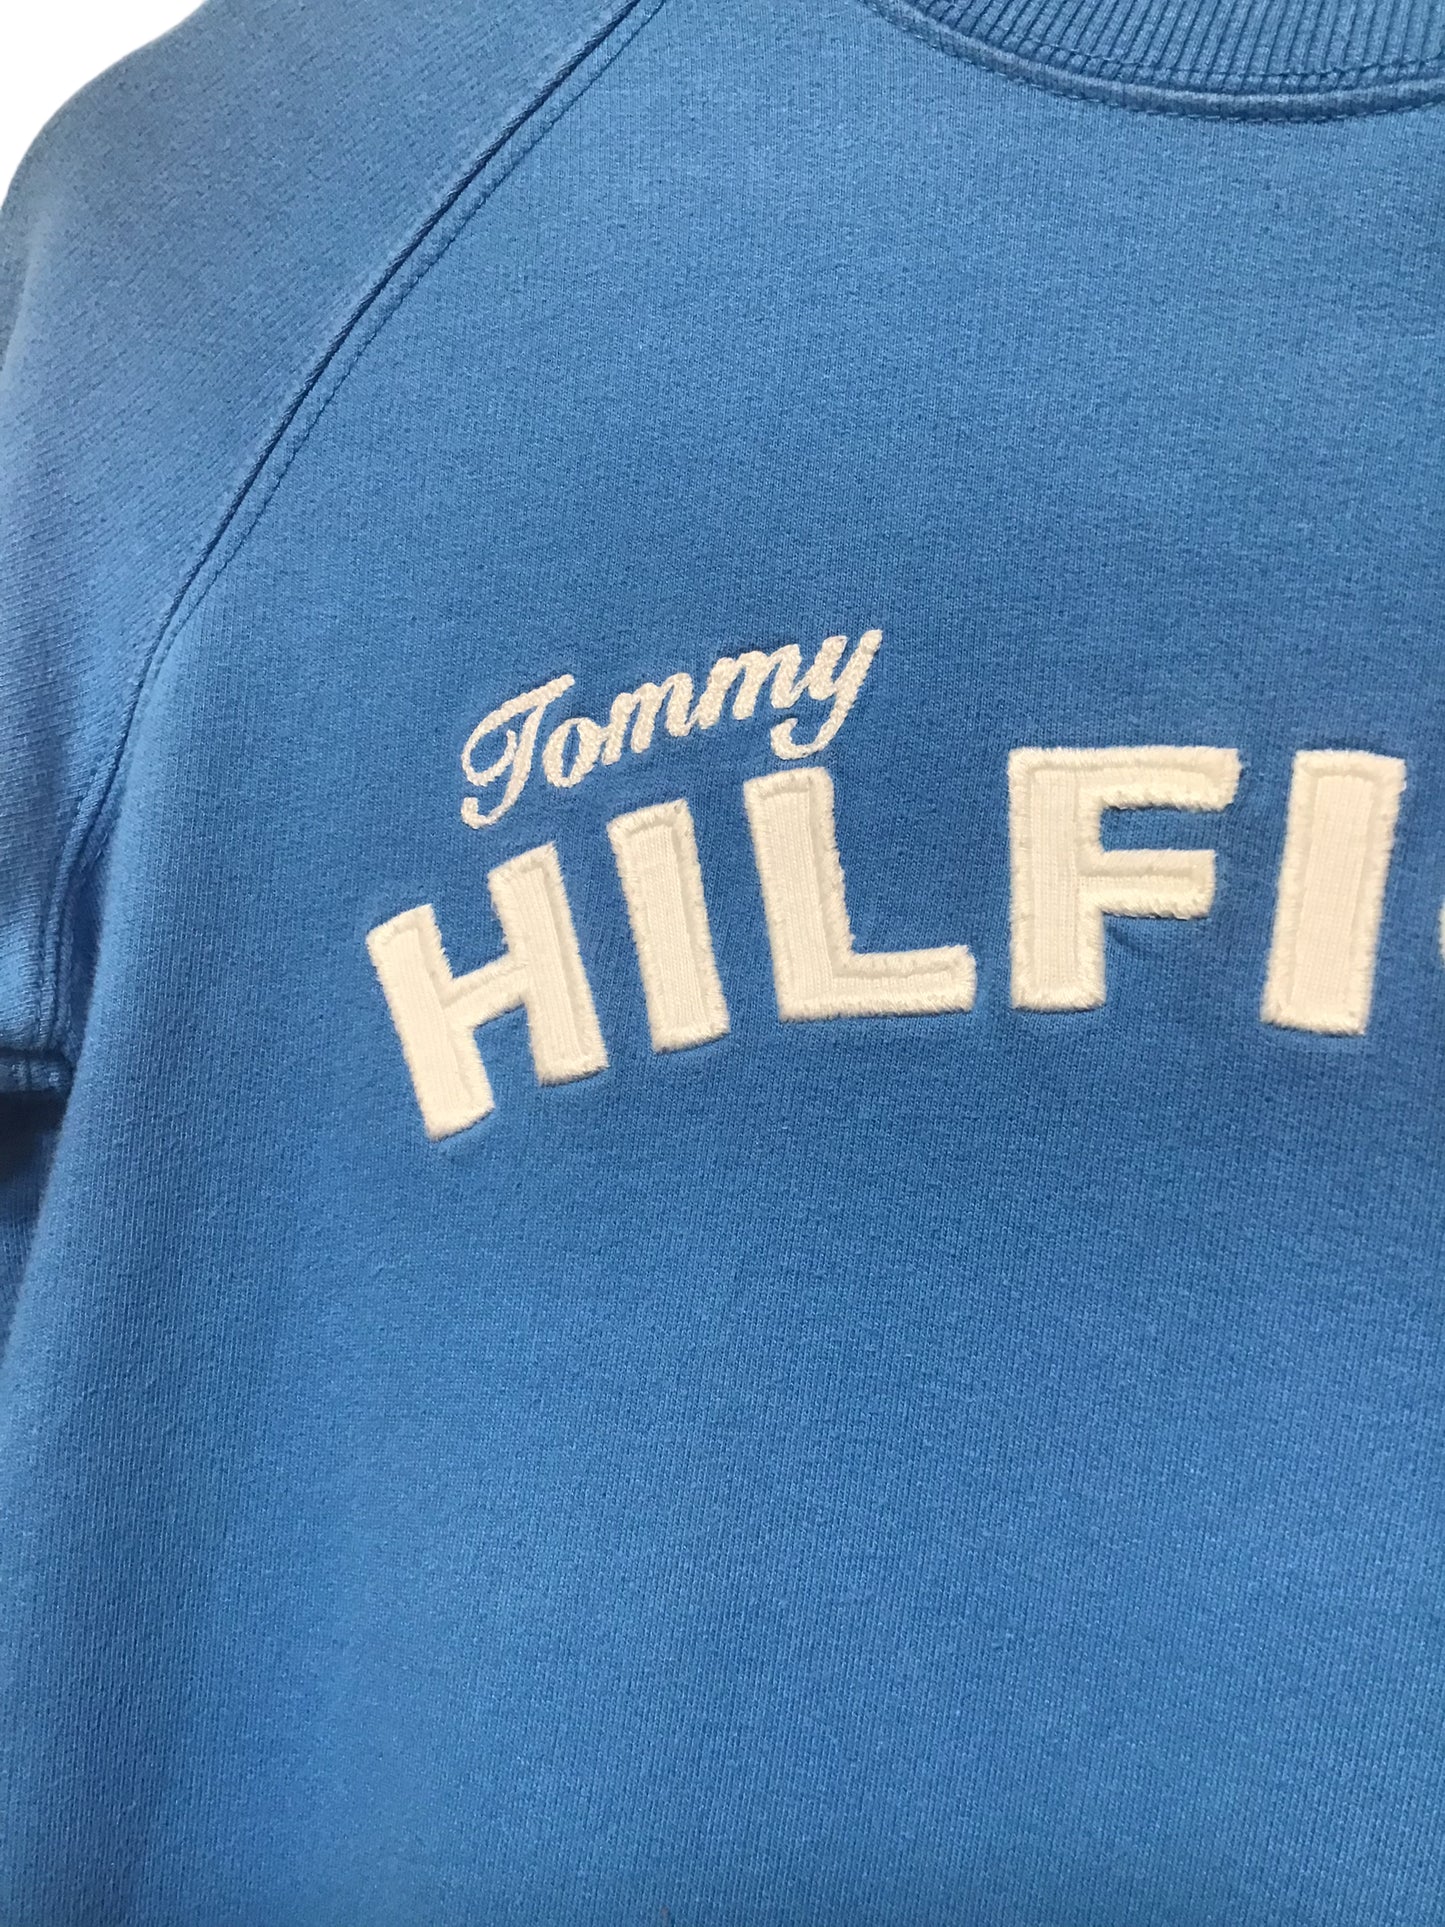 Tommy Hilfiger Sweatshirt (Size XS)